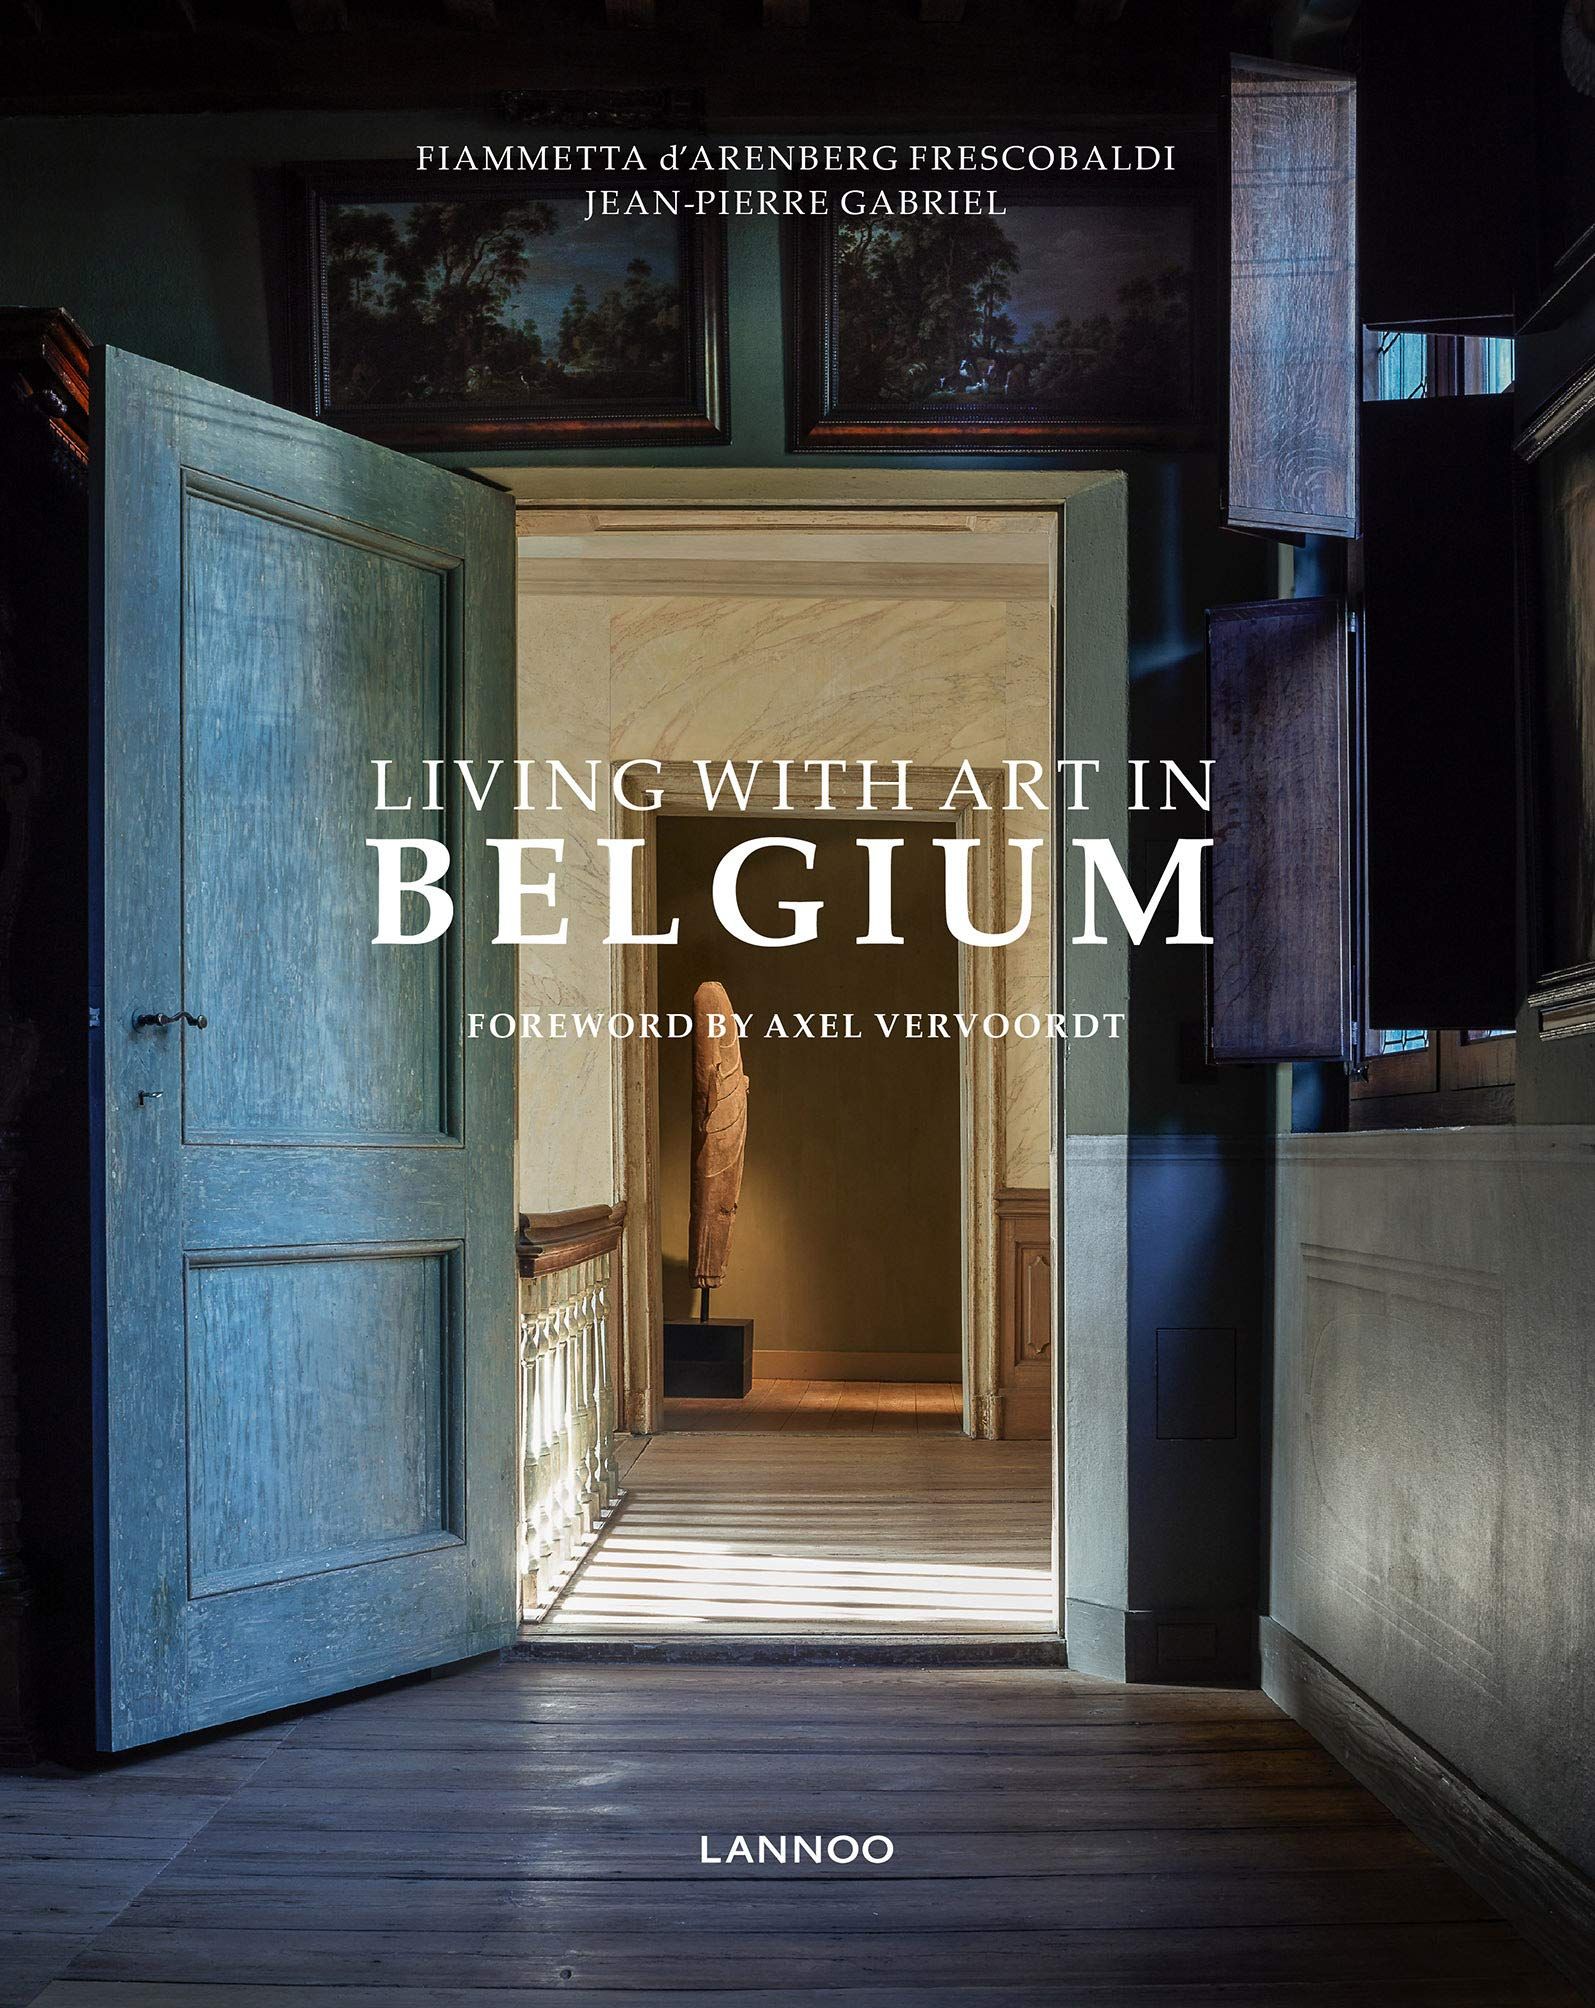  Living With Art In Belgium_Fiammetta d'Arenberg Frescobaldi_9789401433549_WORDS & VISUALS PRESS PTE LTD 